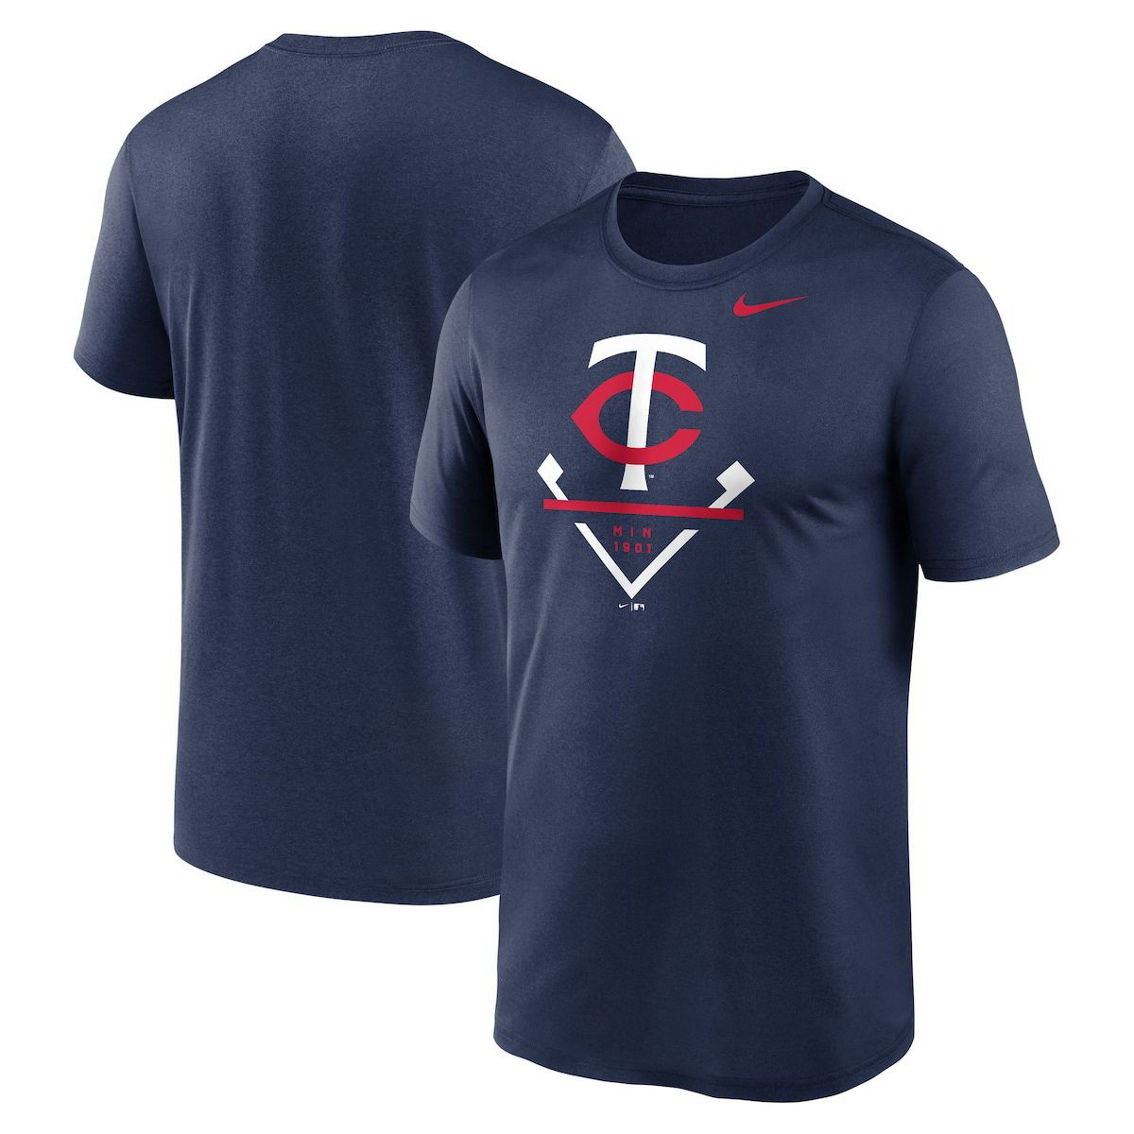 Nike Men's Navy Minnesota Twins Icon Legend T-Shirt - Image 2 of 4